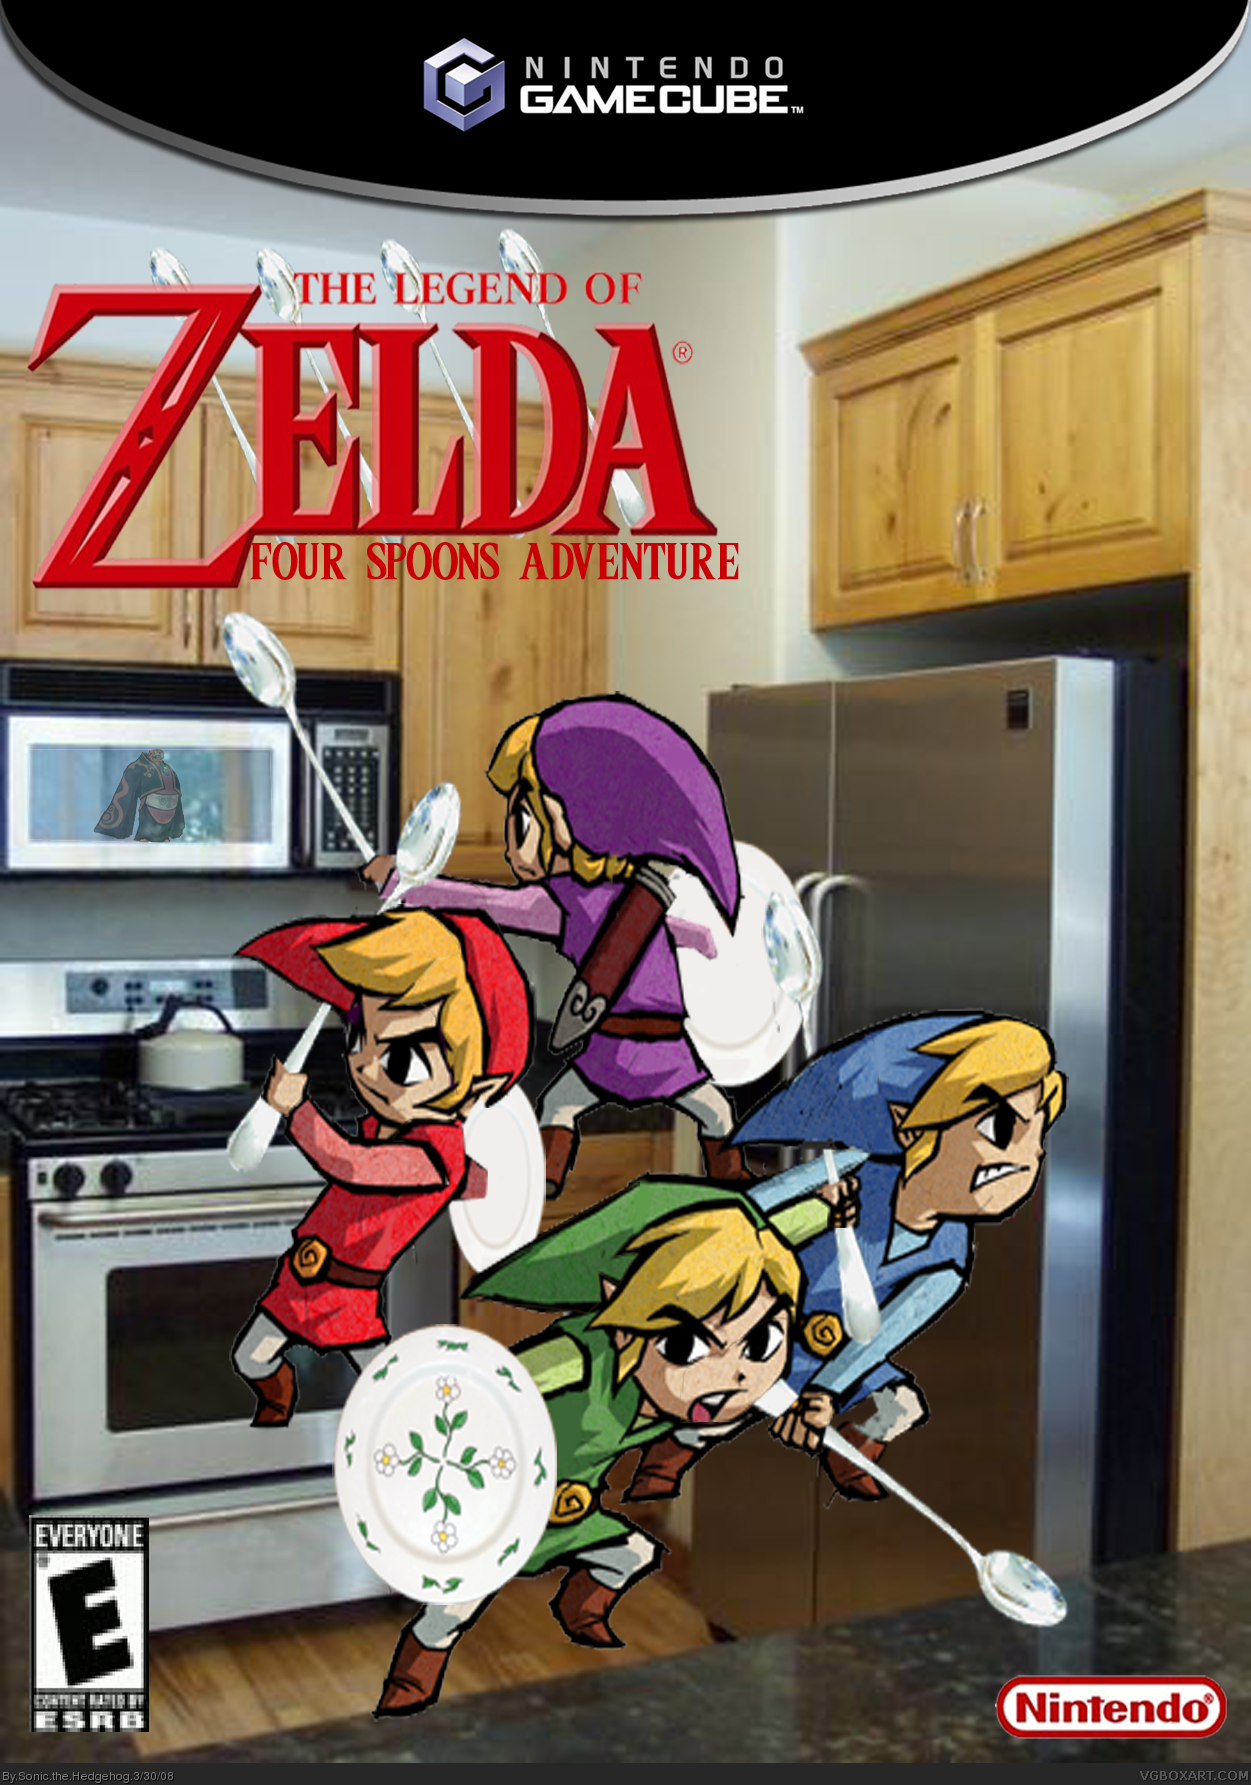 The Legend of Zelda: Four Spoons Adventure box cover